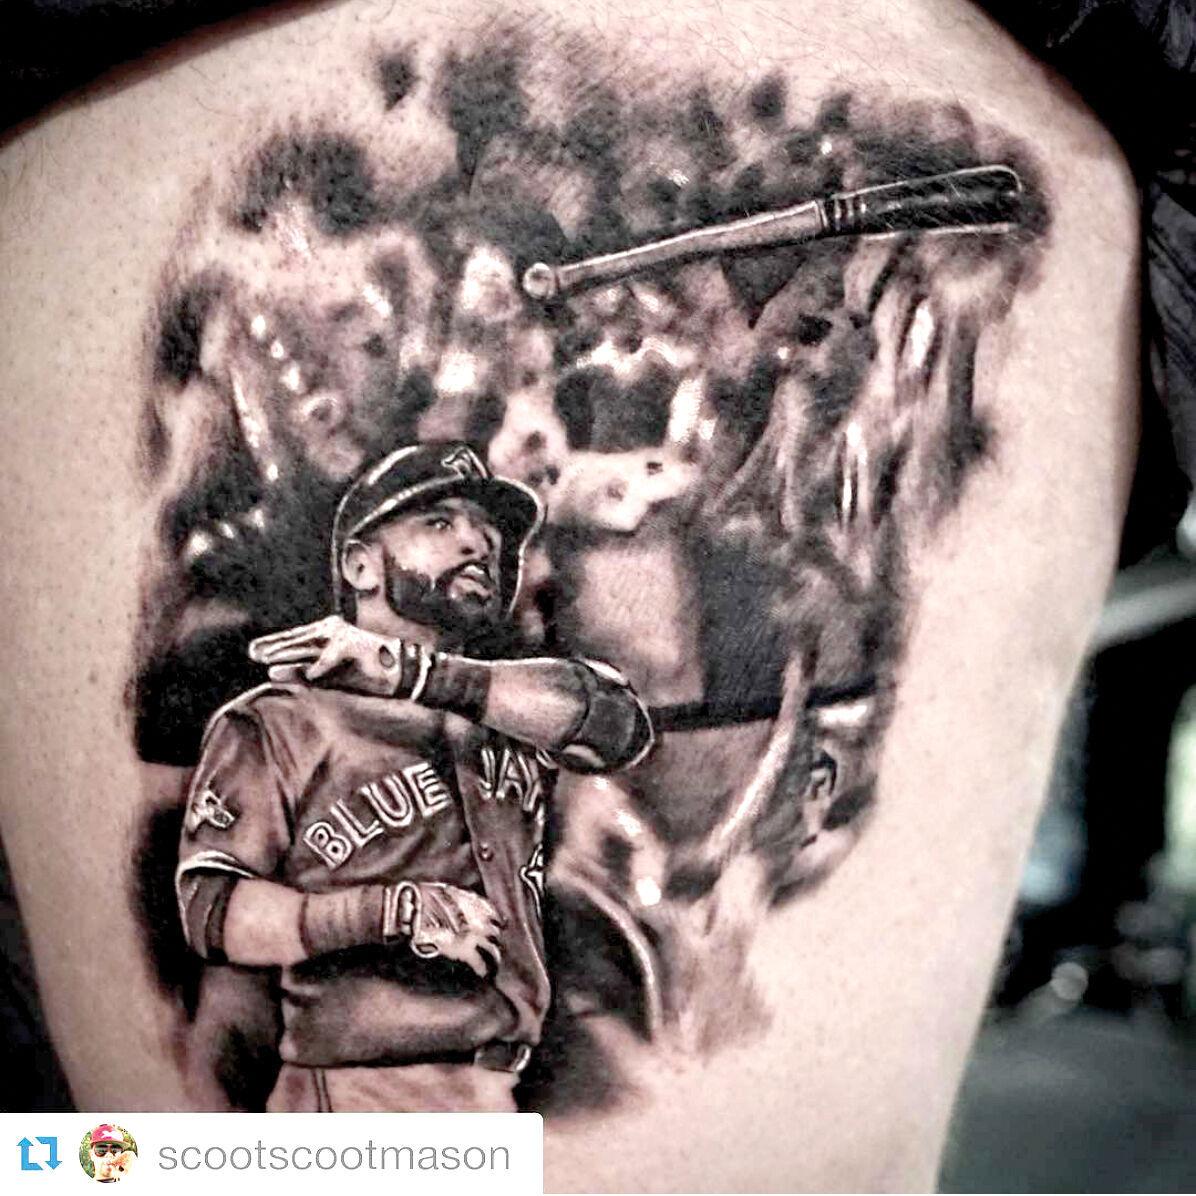 Fan who got Jose Bautista 'bat flip' tattoo has no regrets